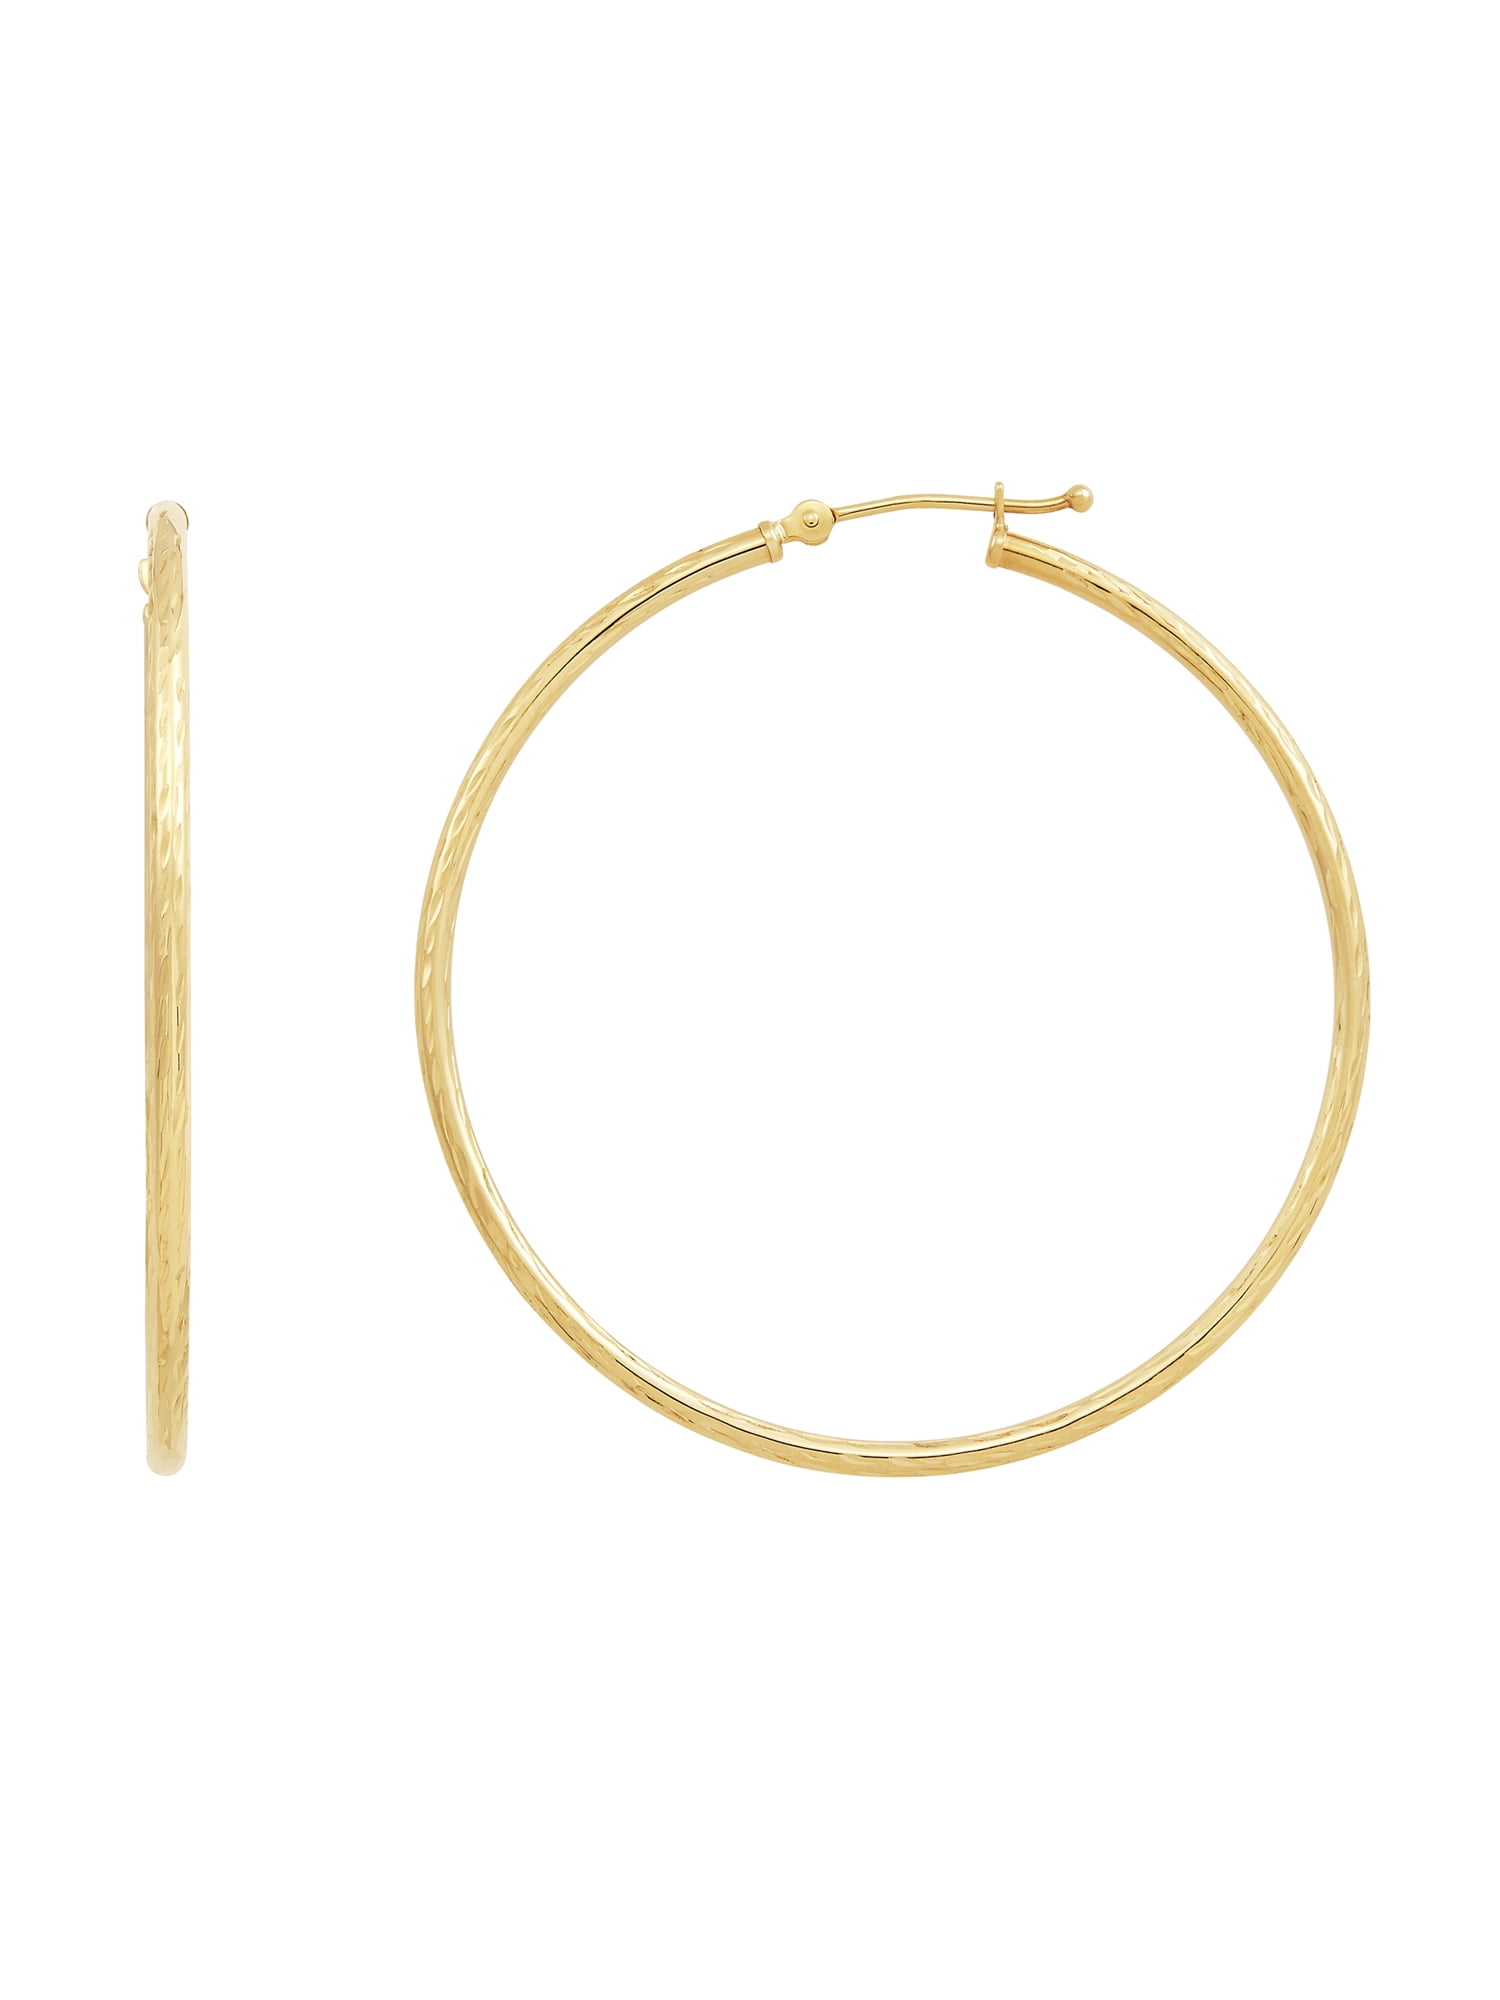 10K Solid Yellow Gold Diamond Cut Hoop Earrings for Girls womens